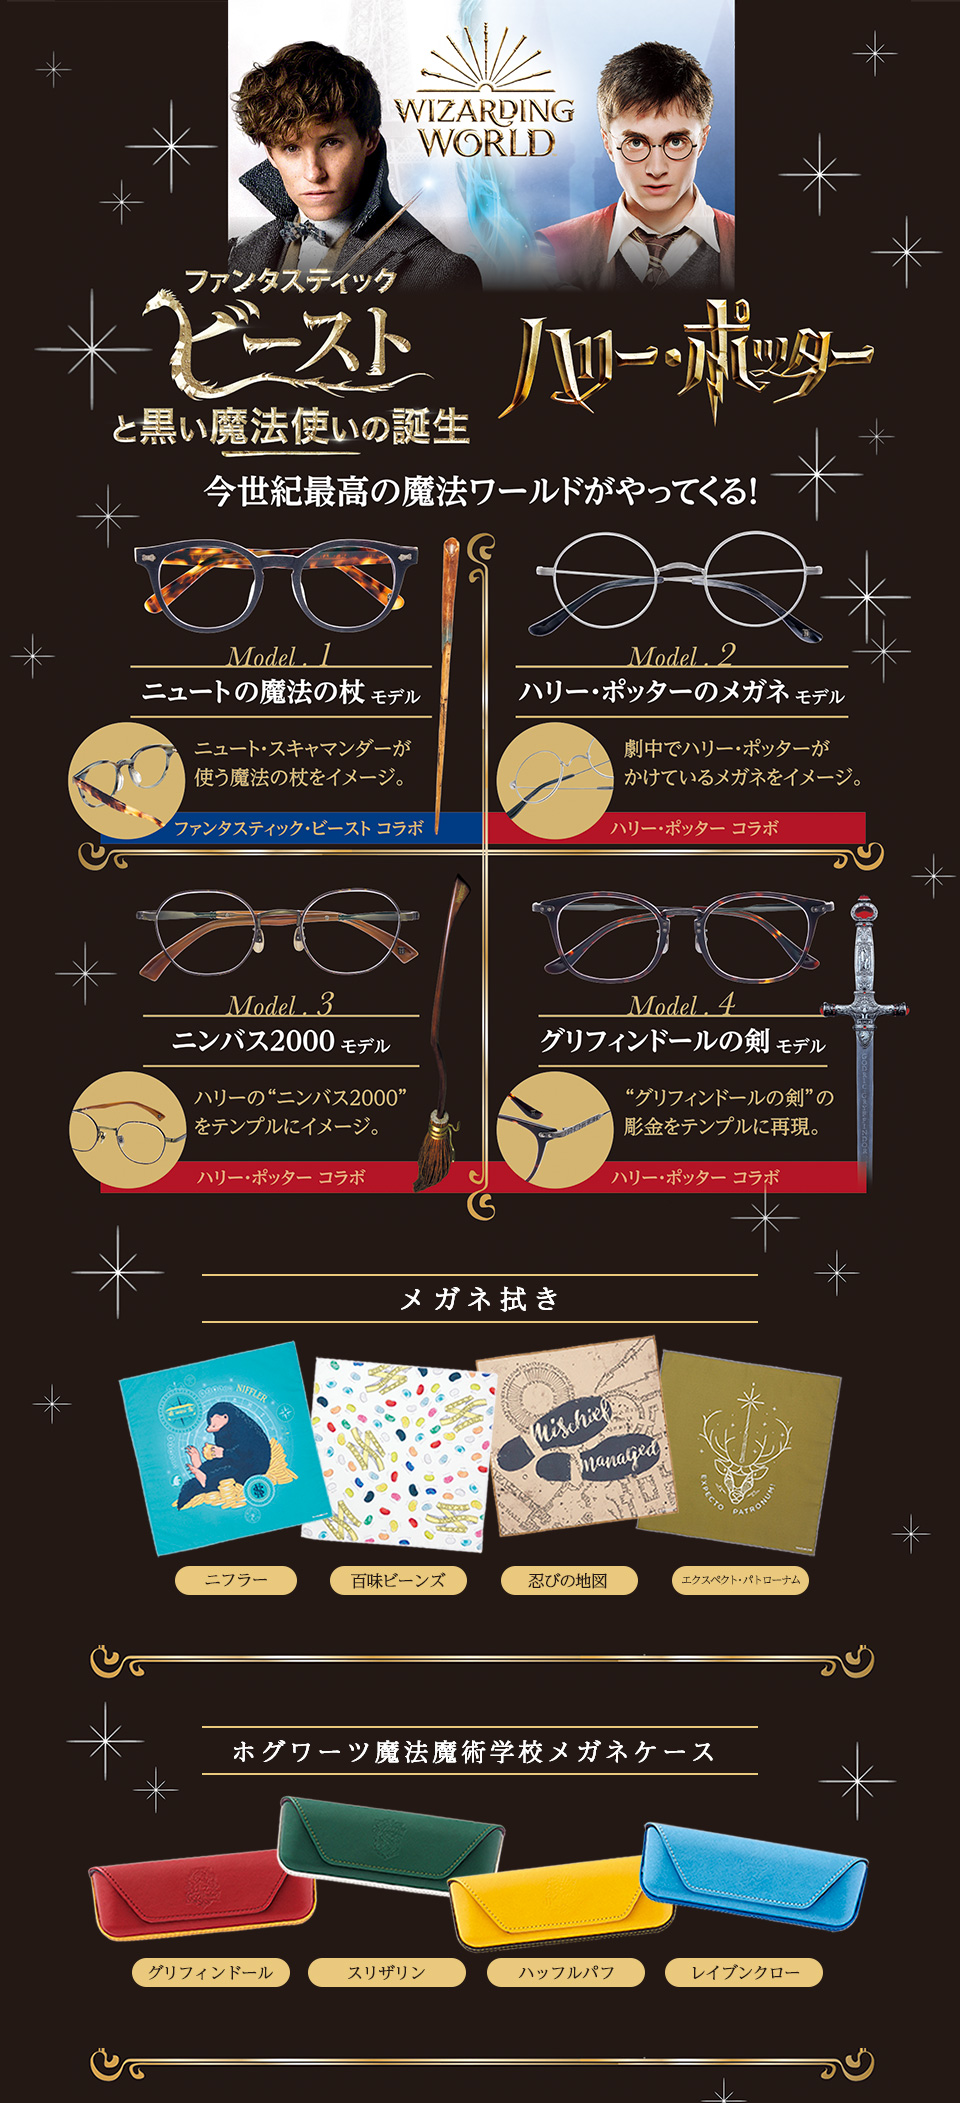 Wizarding World ウィザーディング ワールド メガネハウス 眼鏡 めがね メガネ コンタクトレンズ サングラス 補聴器を販売する眼鏡店